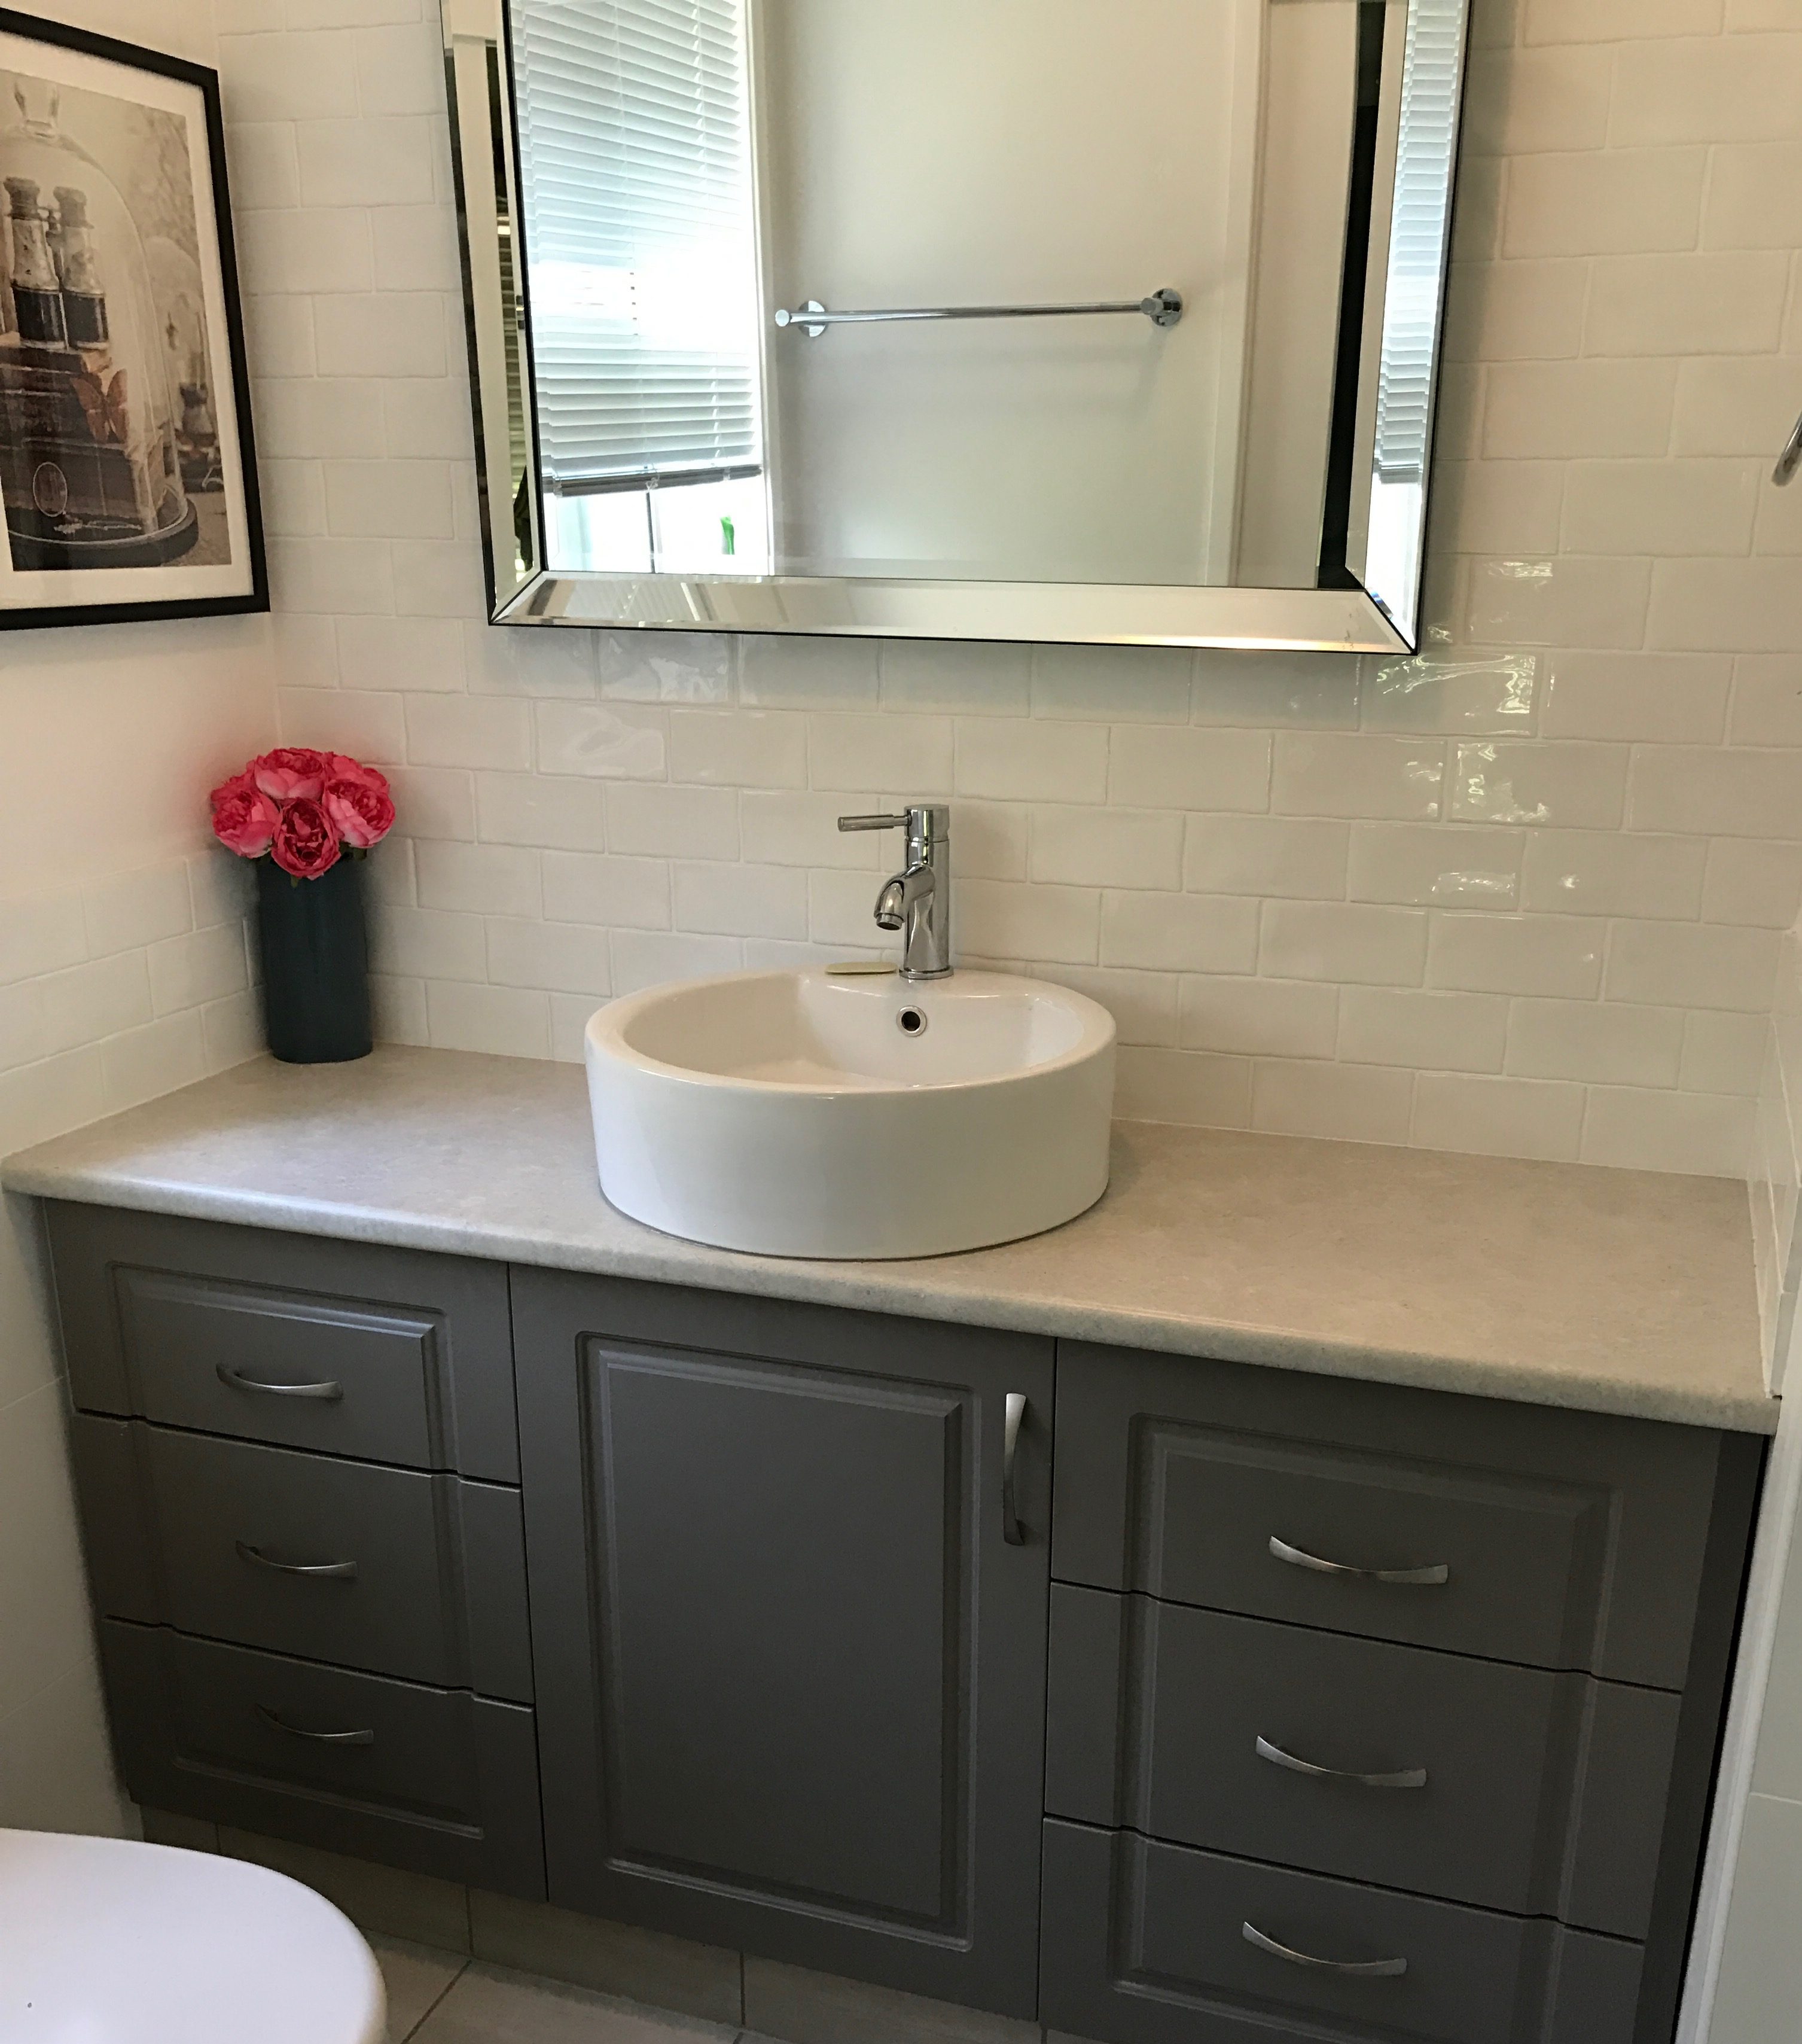 A round ceramic bathroom sink on  navy vanity unit